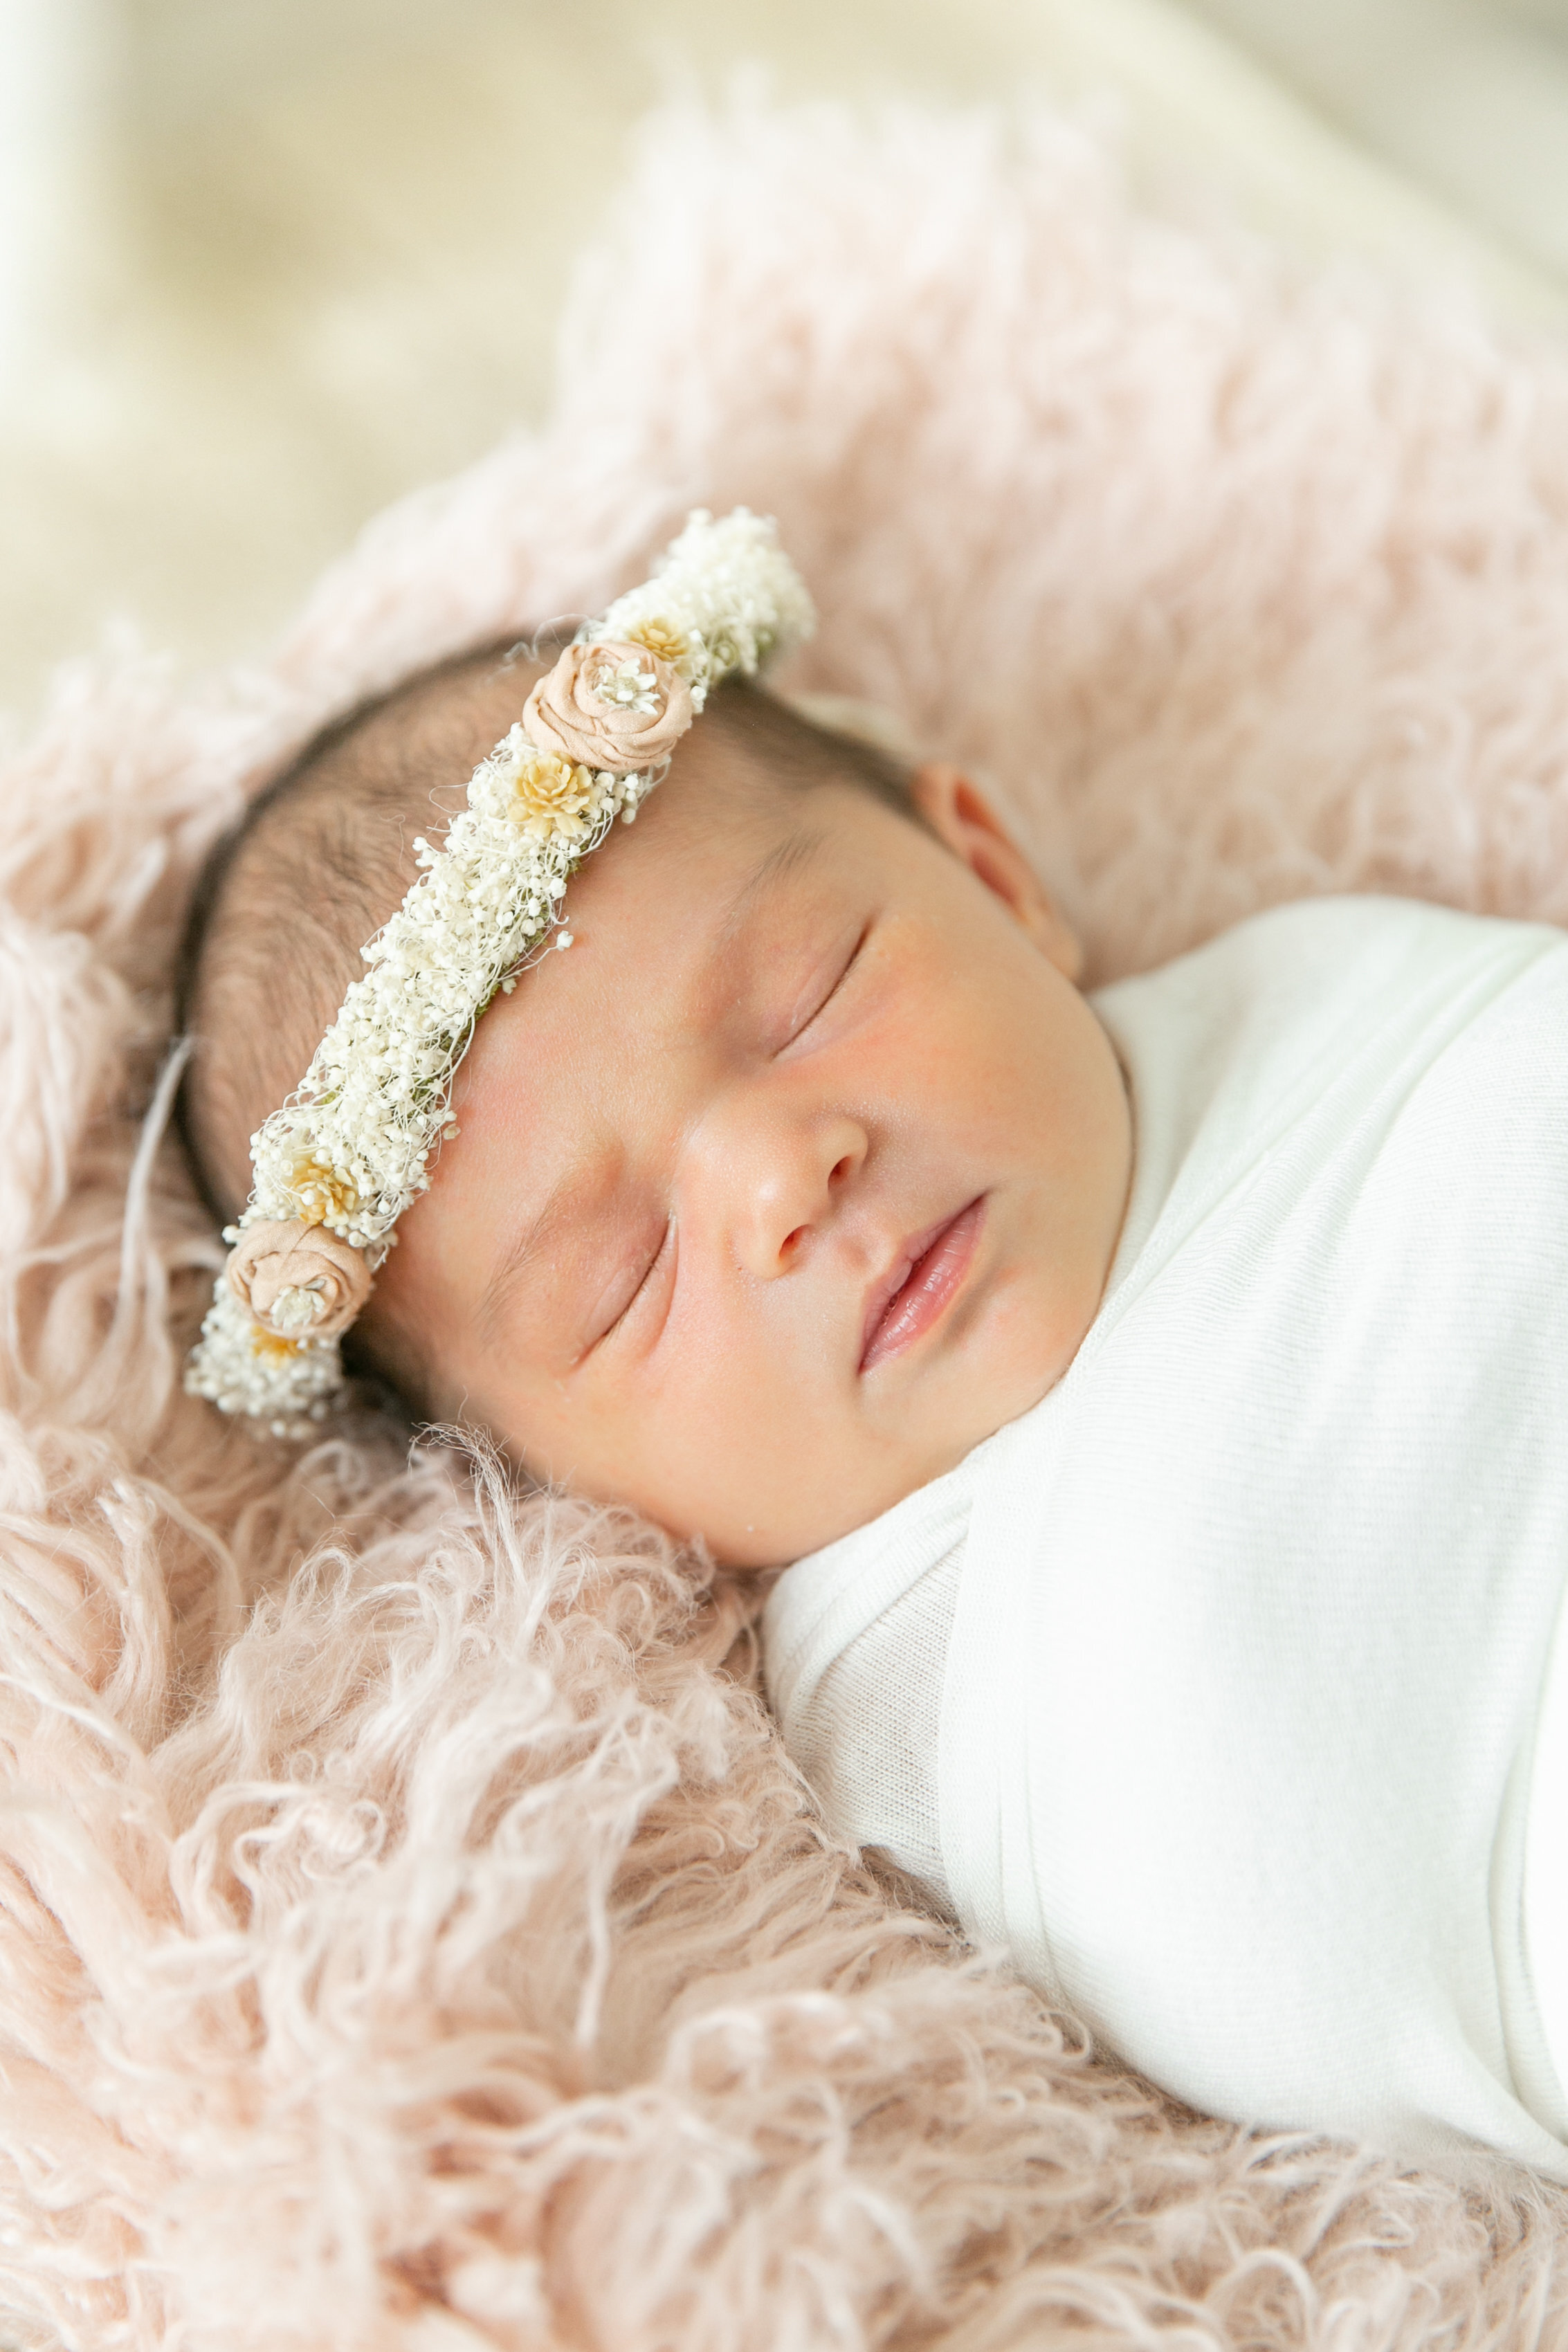 Karlie Colleen Photography - Arizona Newborn photography - Olivia-3